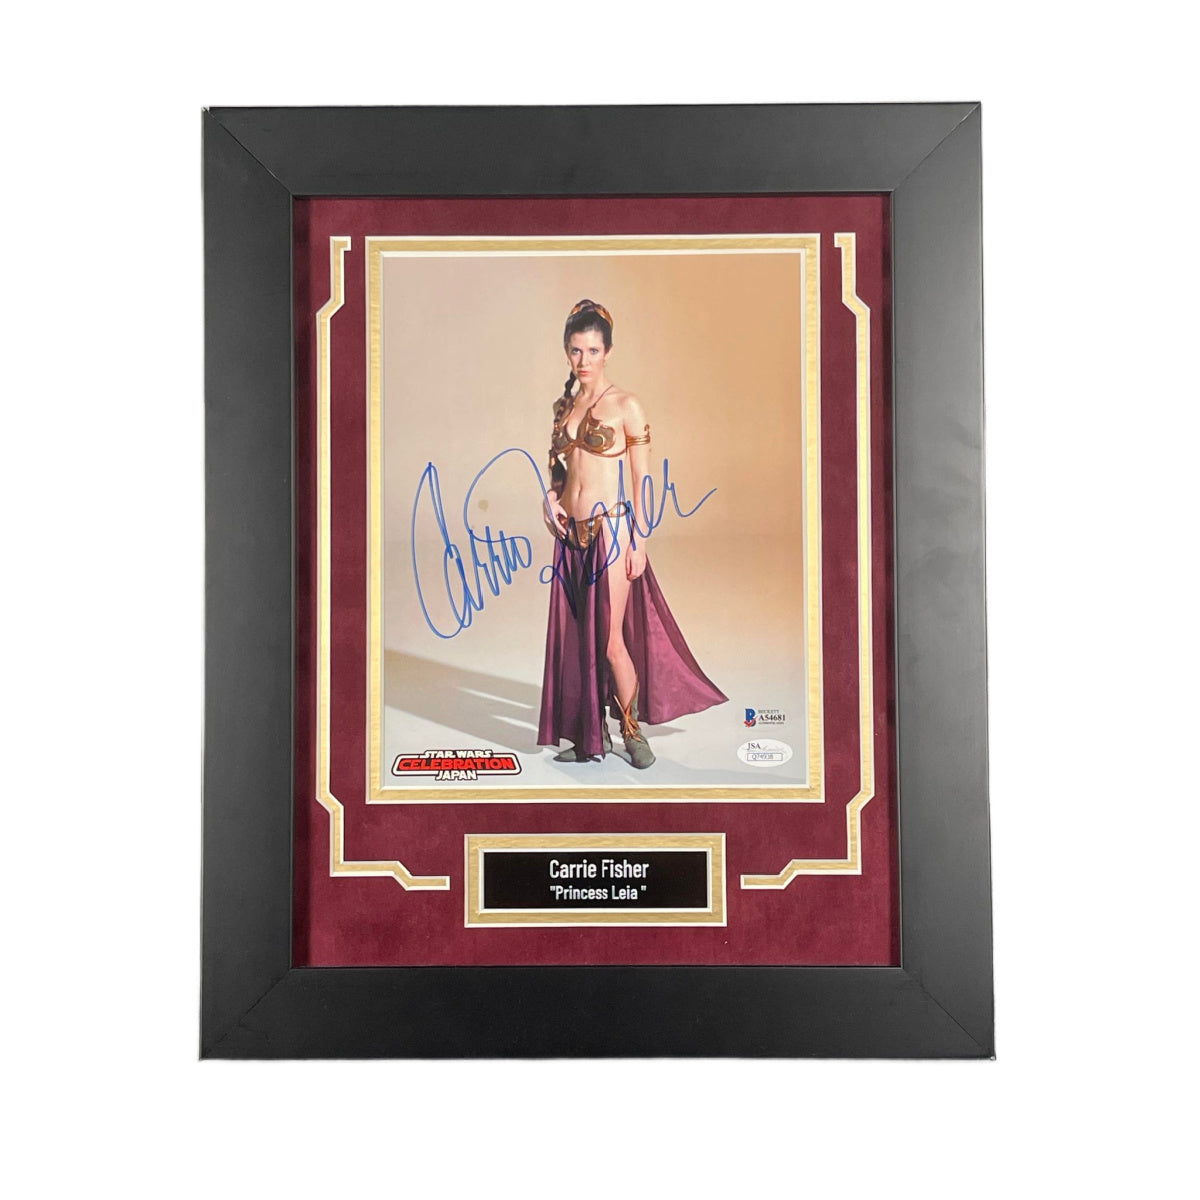 Carrie Fisher Signed 8x10 Photo Framed Star Wars Princess Leia Autographed JSA BAS